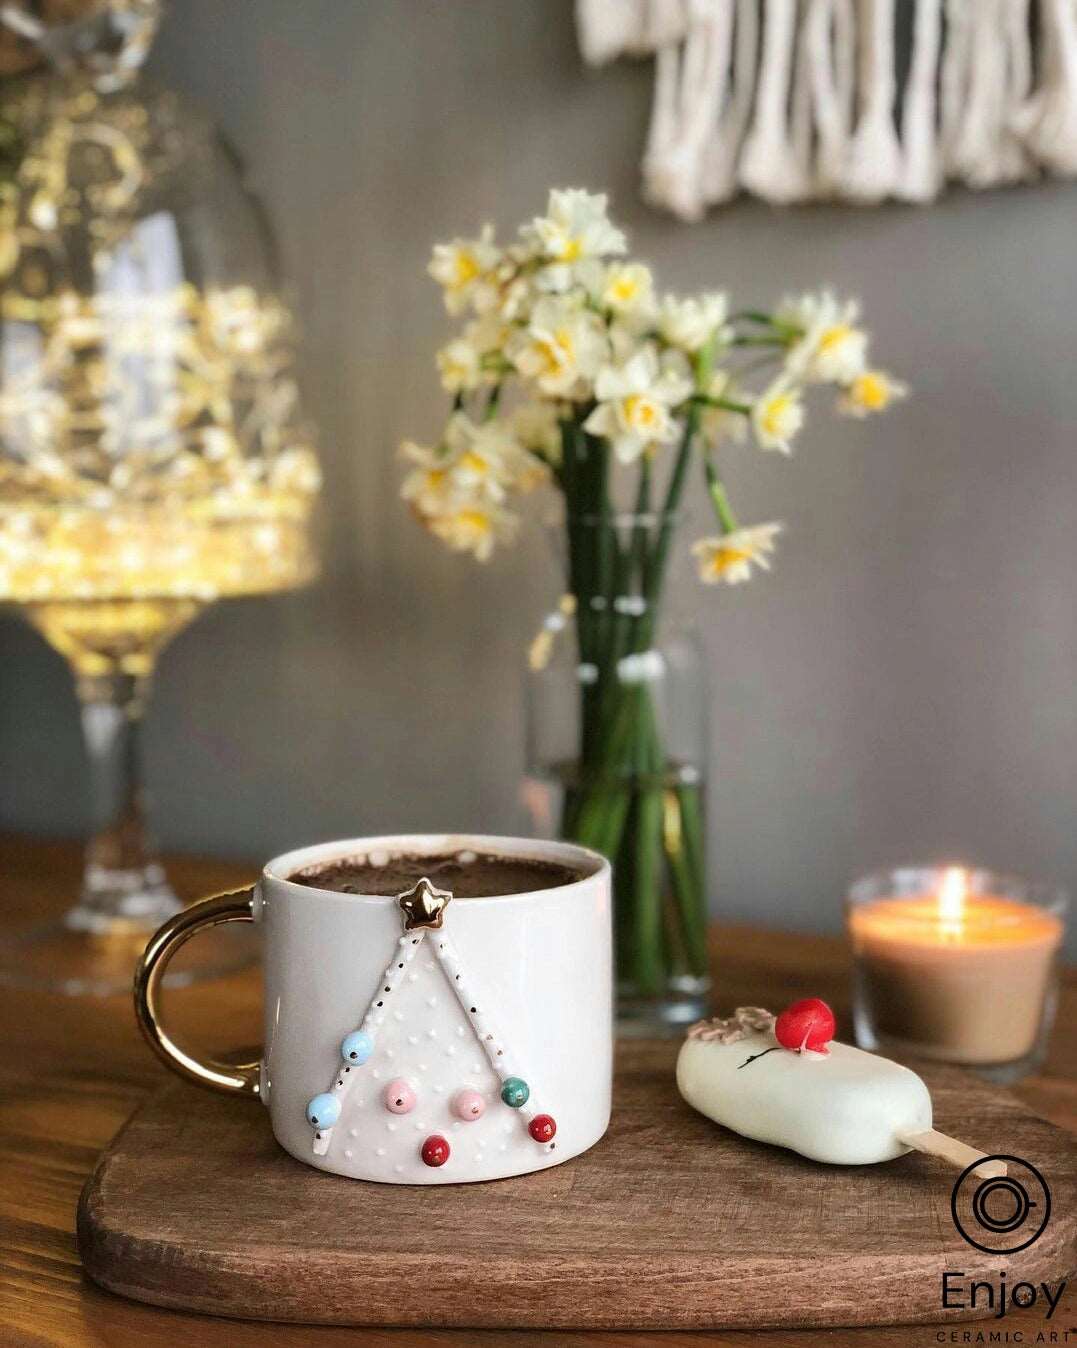 Handmade Christmas Tree Ceramic Coffee Mug - The Perfect Holiday-Themed Handmade Gift